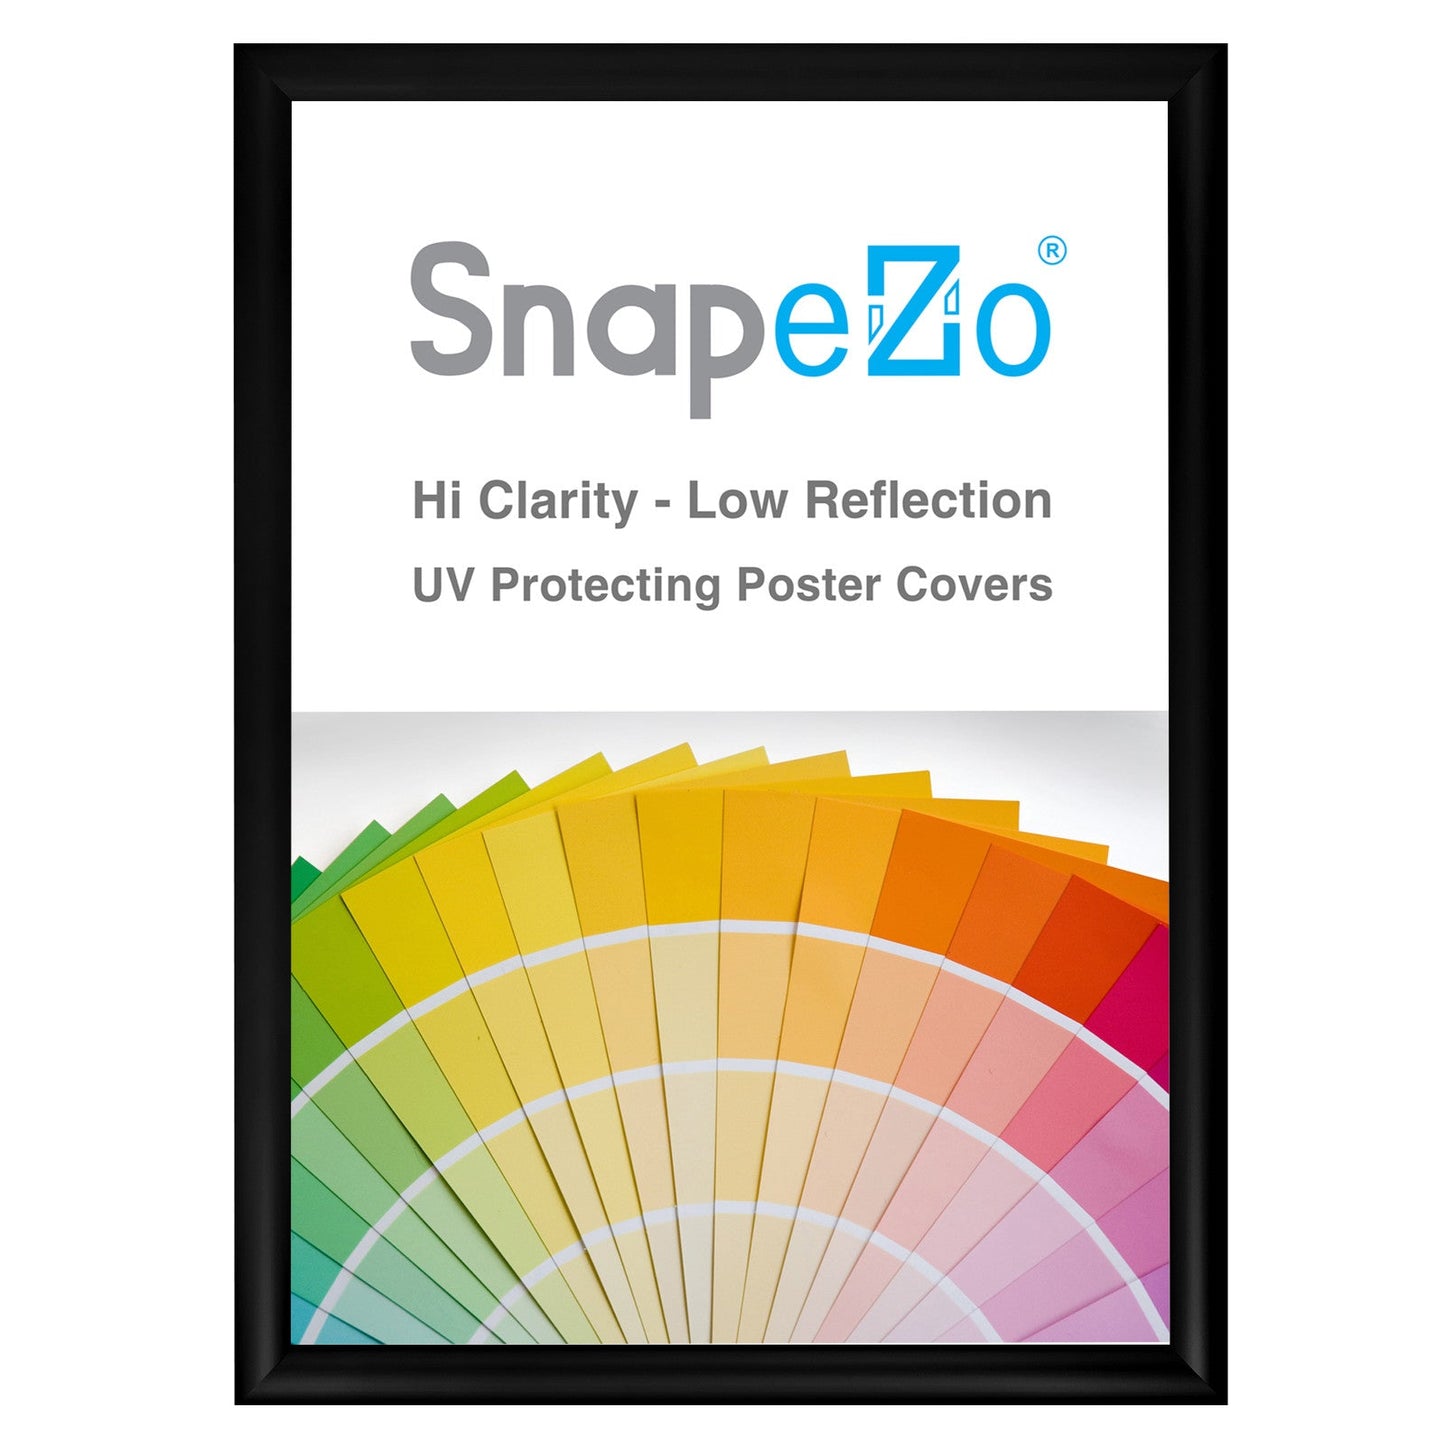 17x24 Black SnapeZo® Snap Frame - 1.2" Profile